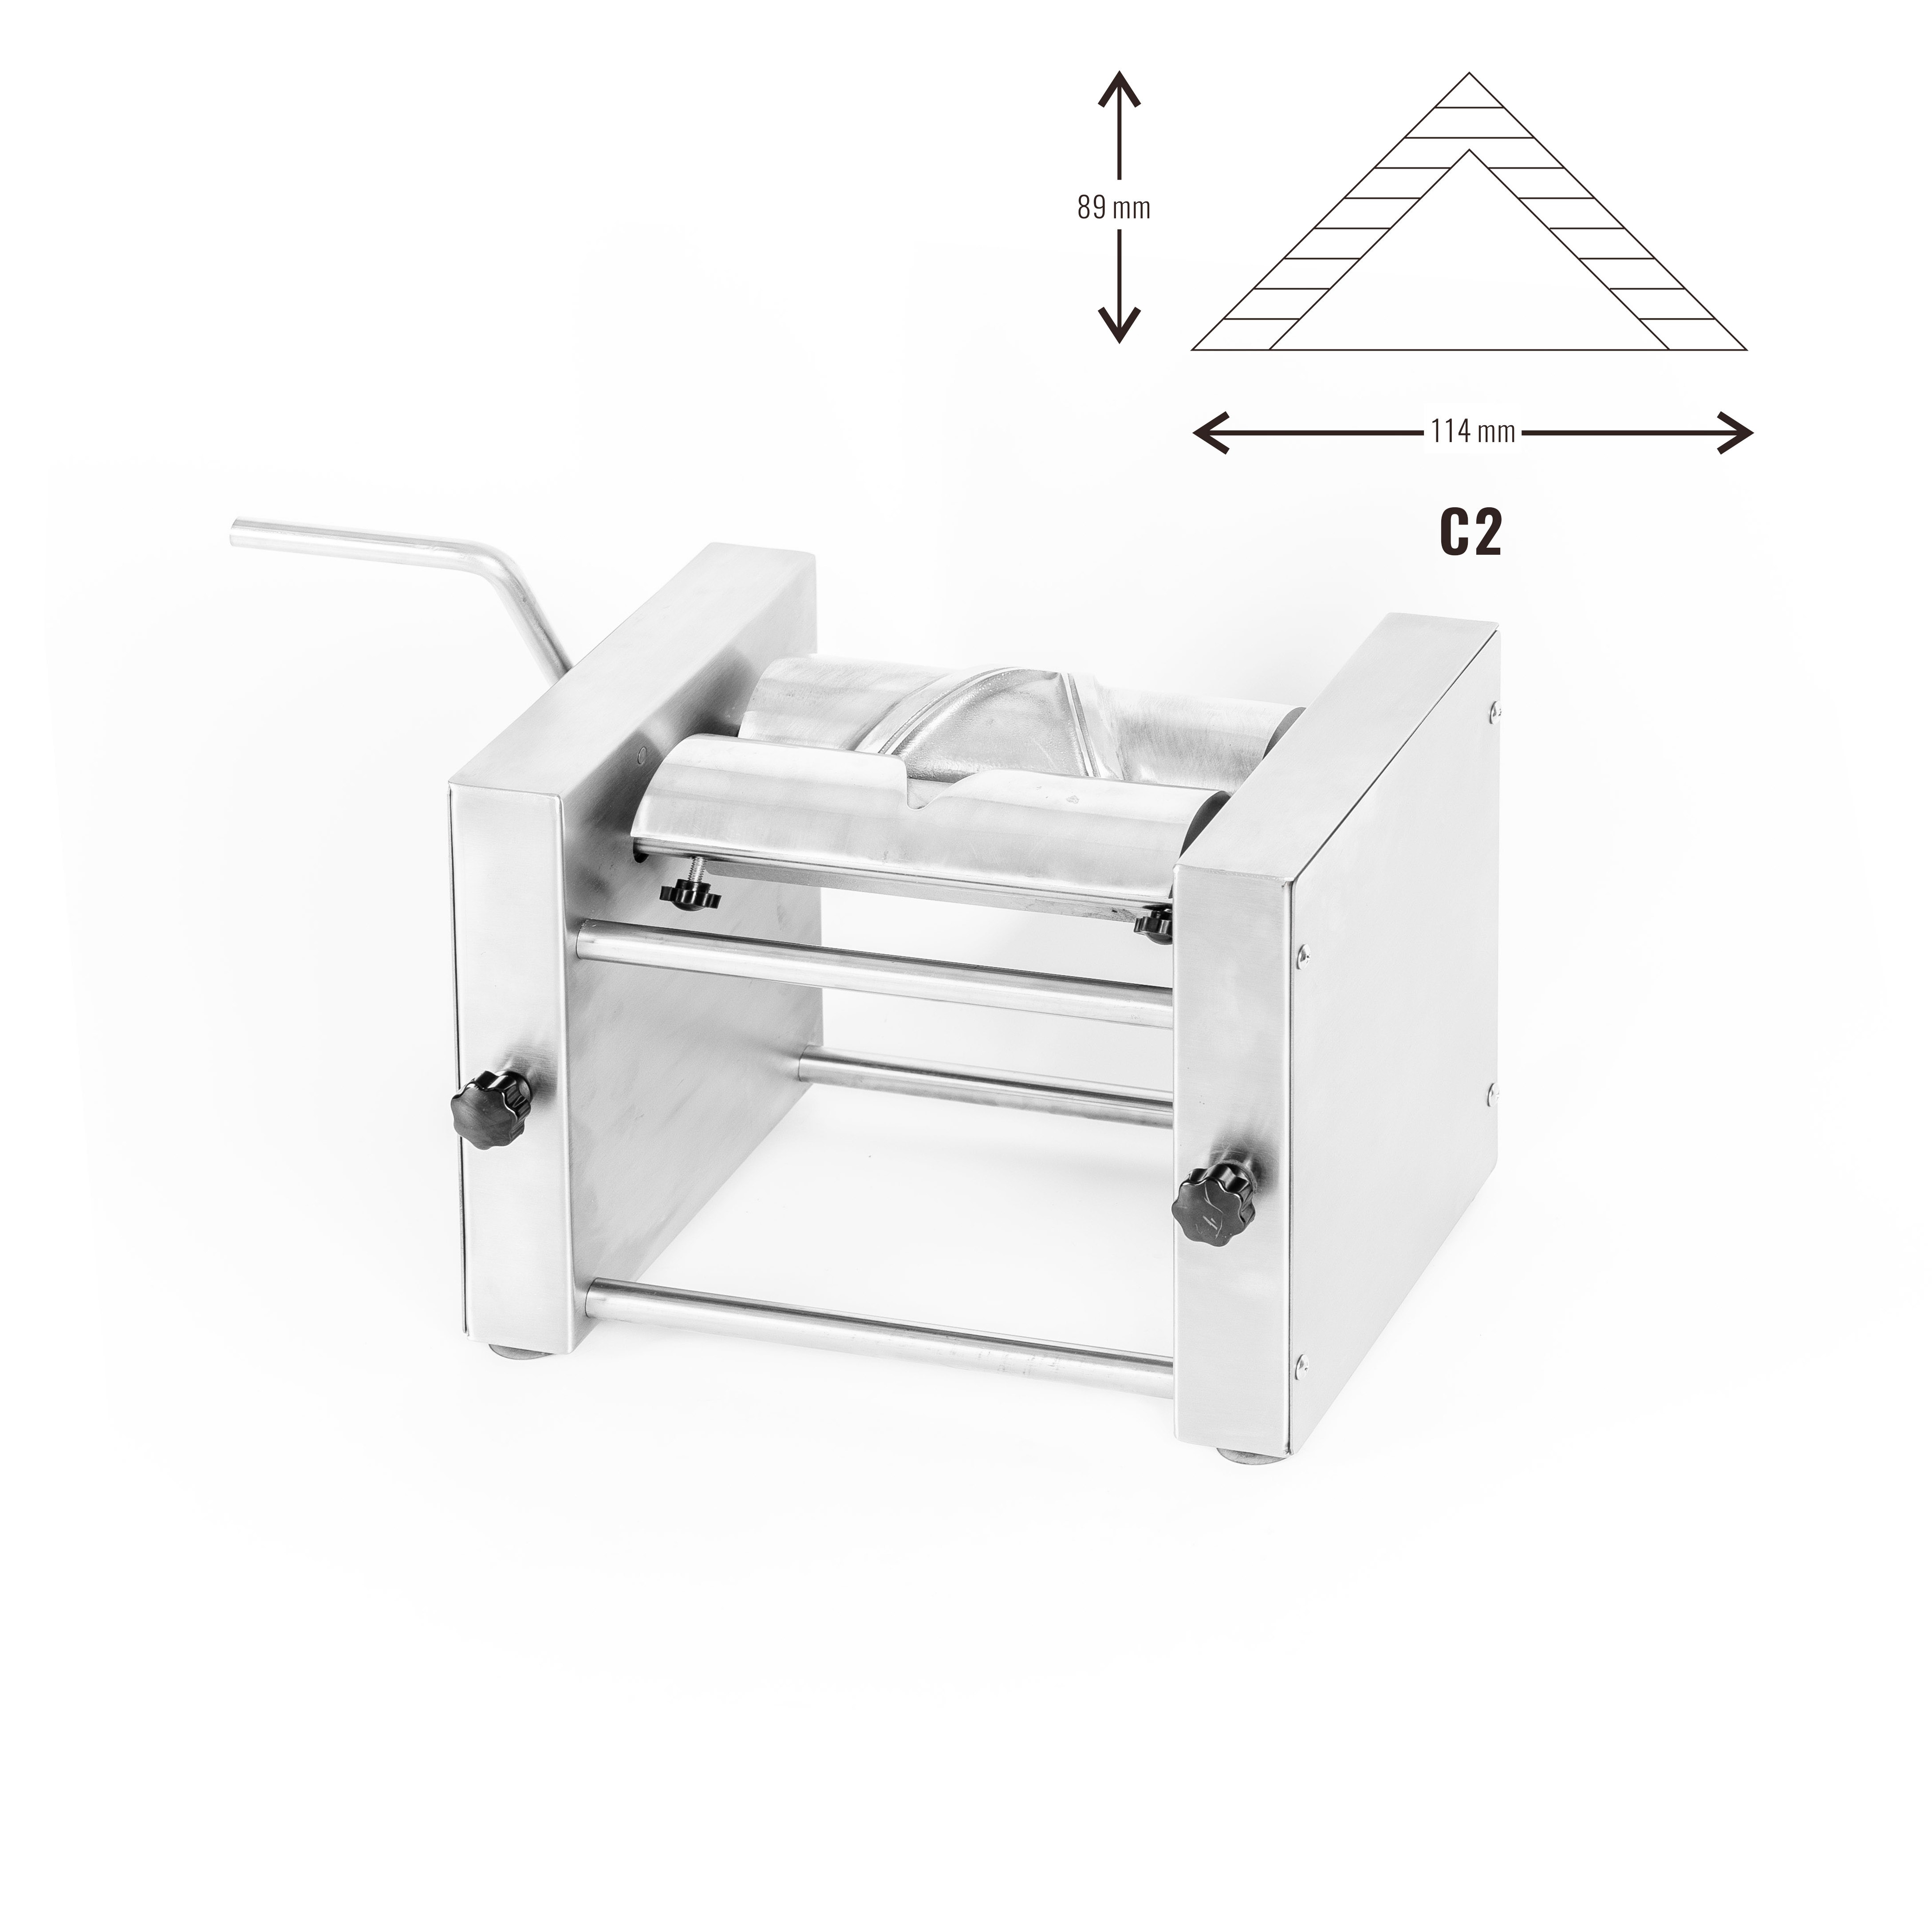 DEM-C2 Commercial Tabletop Samosa Maker Turnover Machine - Main